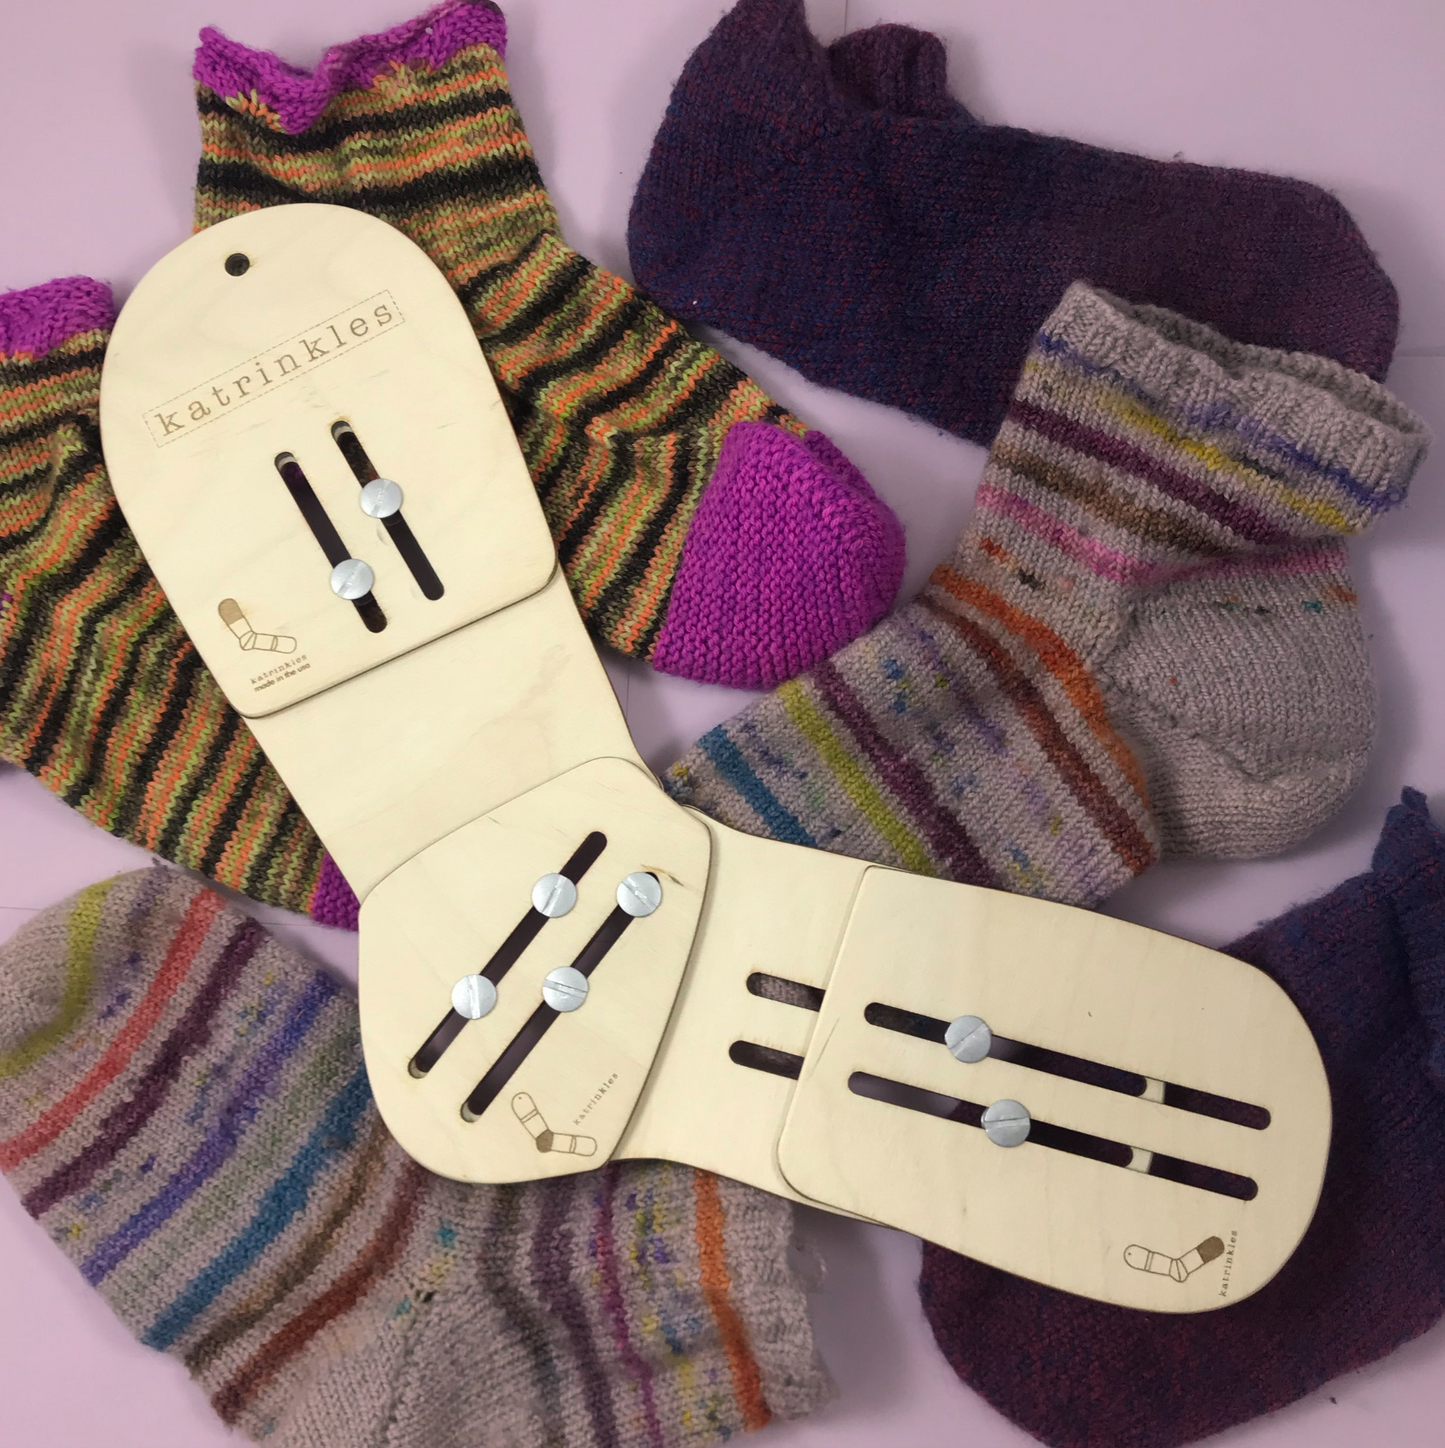 Adjustable Sock Blockers or Knee Sock Extenders - Pair (Baby, Kid, Adult Sizes Available)